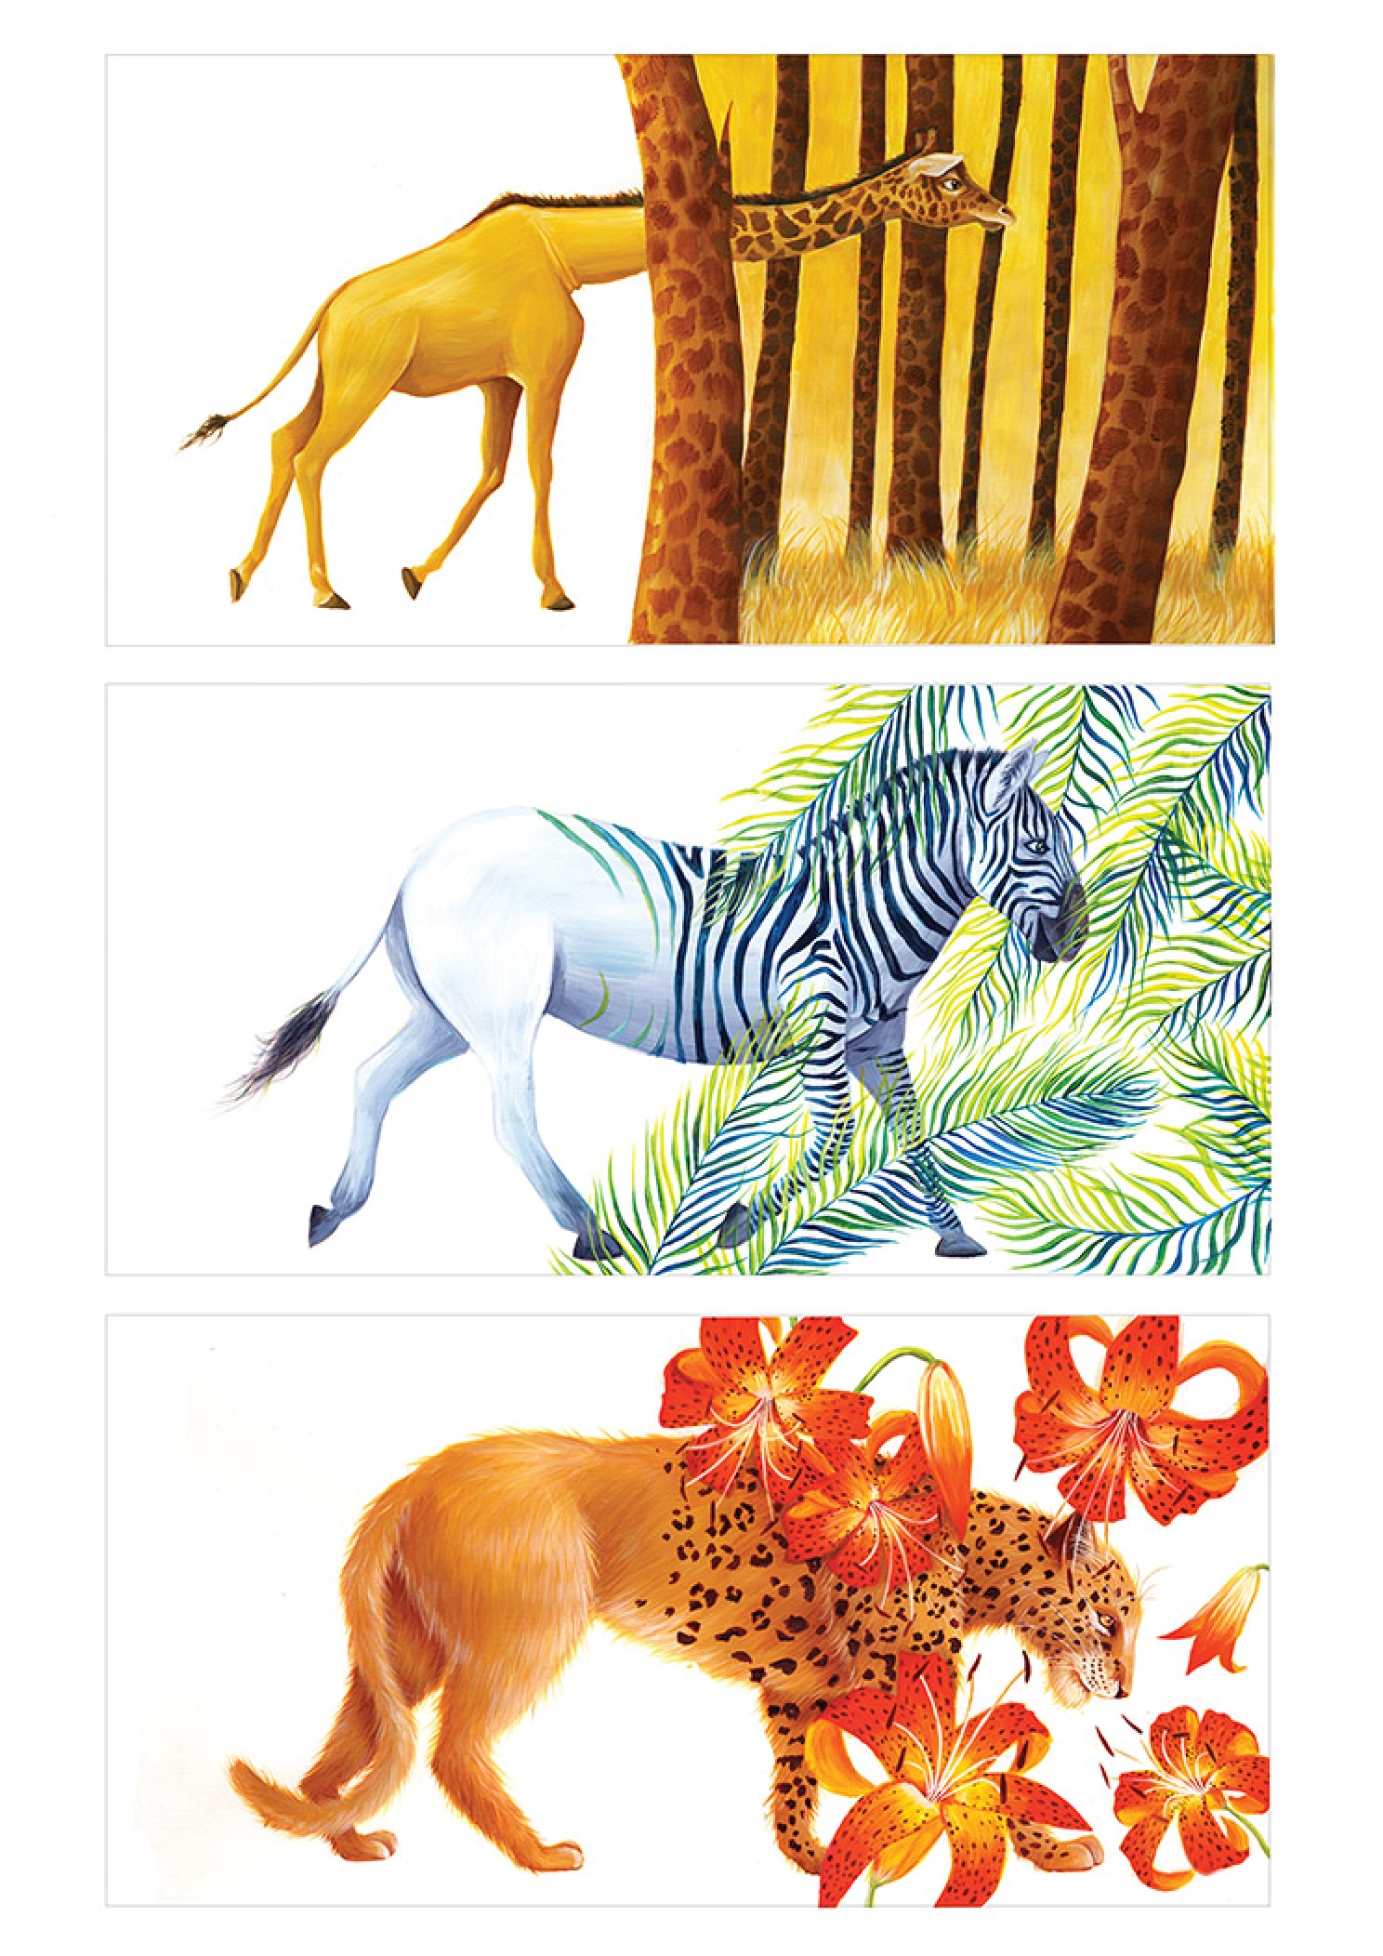 Children's Book Illustration Portfolio